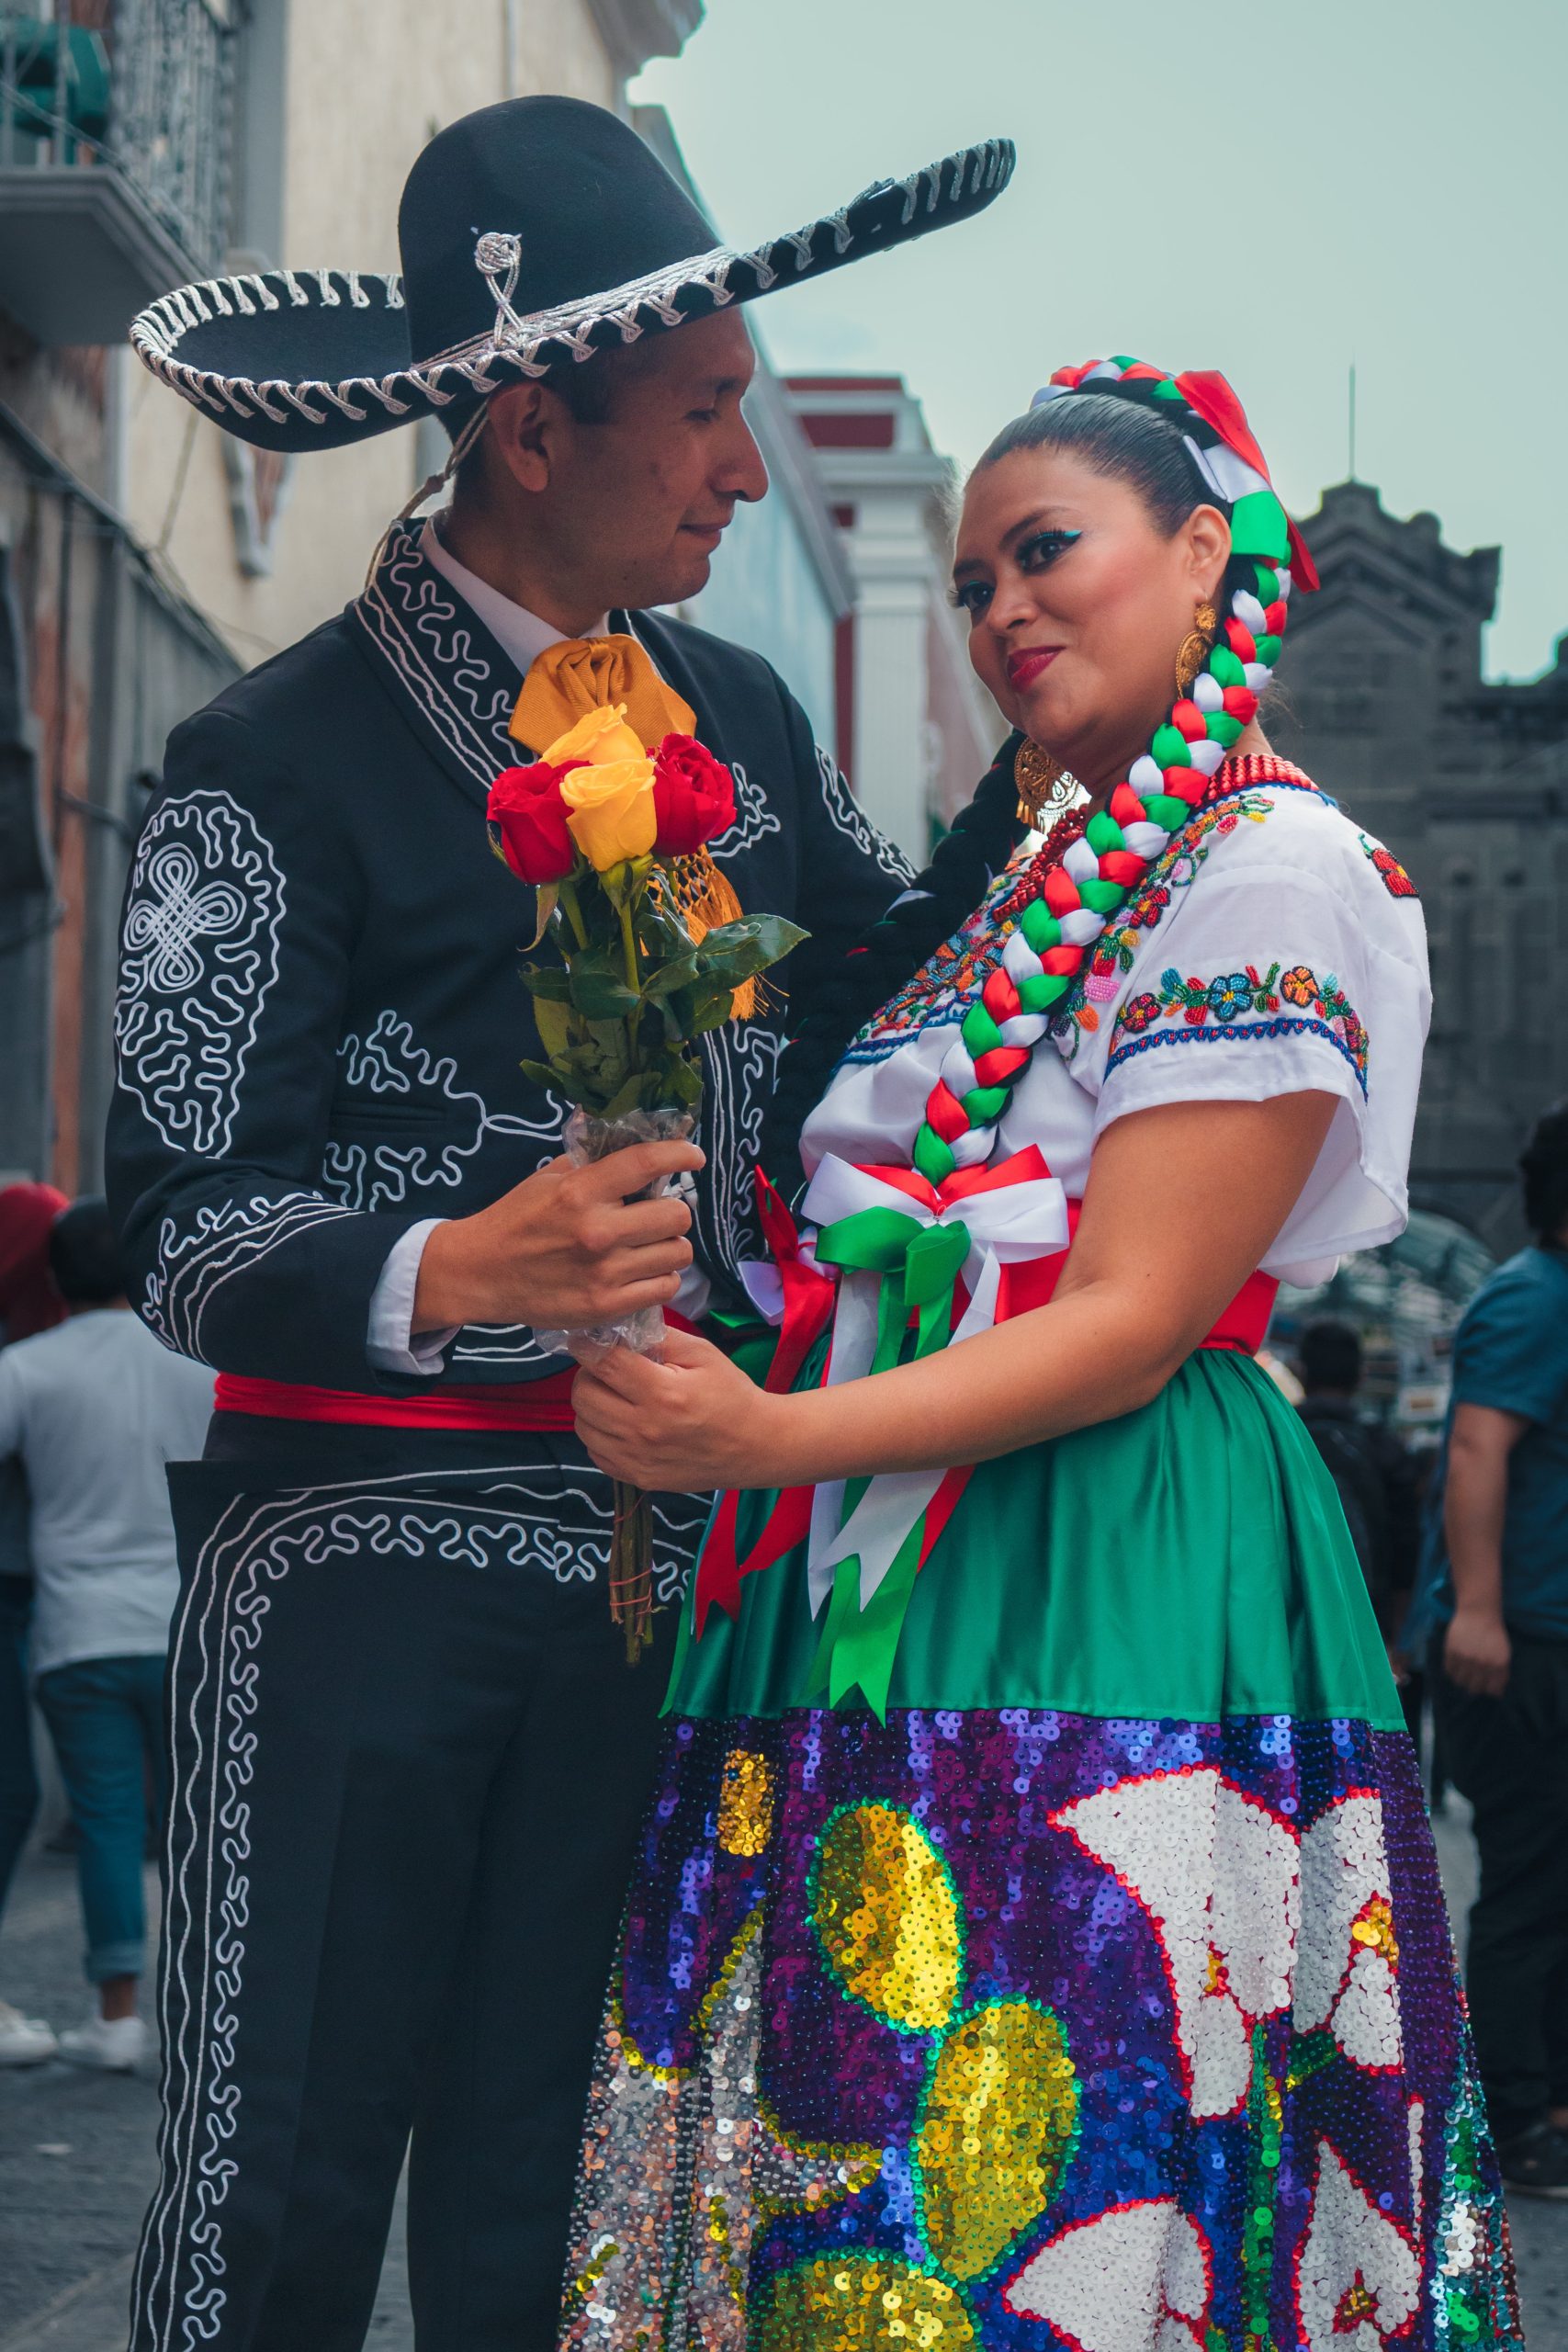 Dancers in traditional dress, Fiesta | Stock Photo